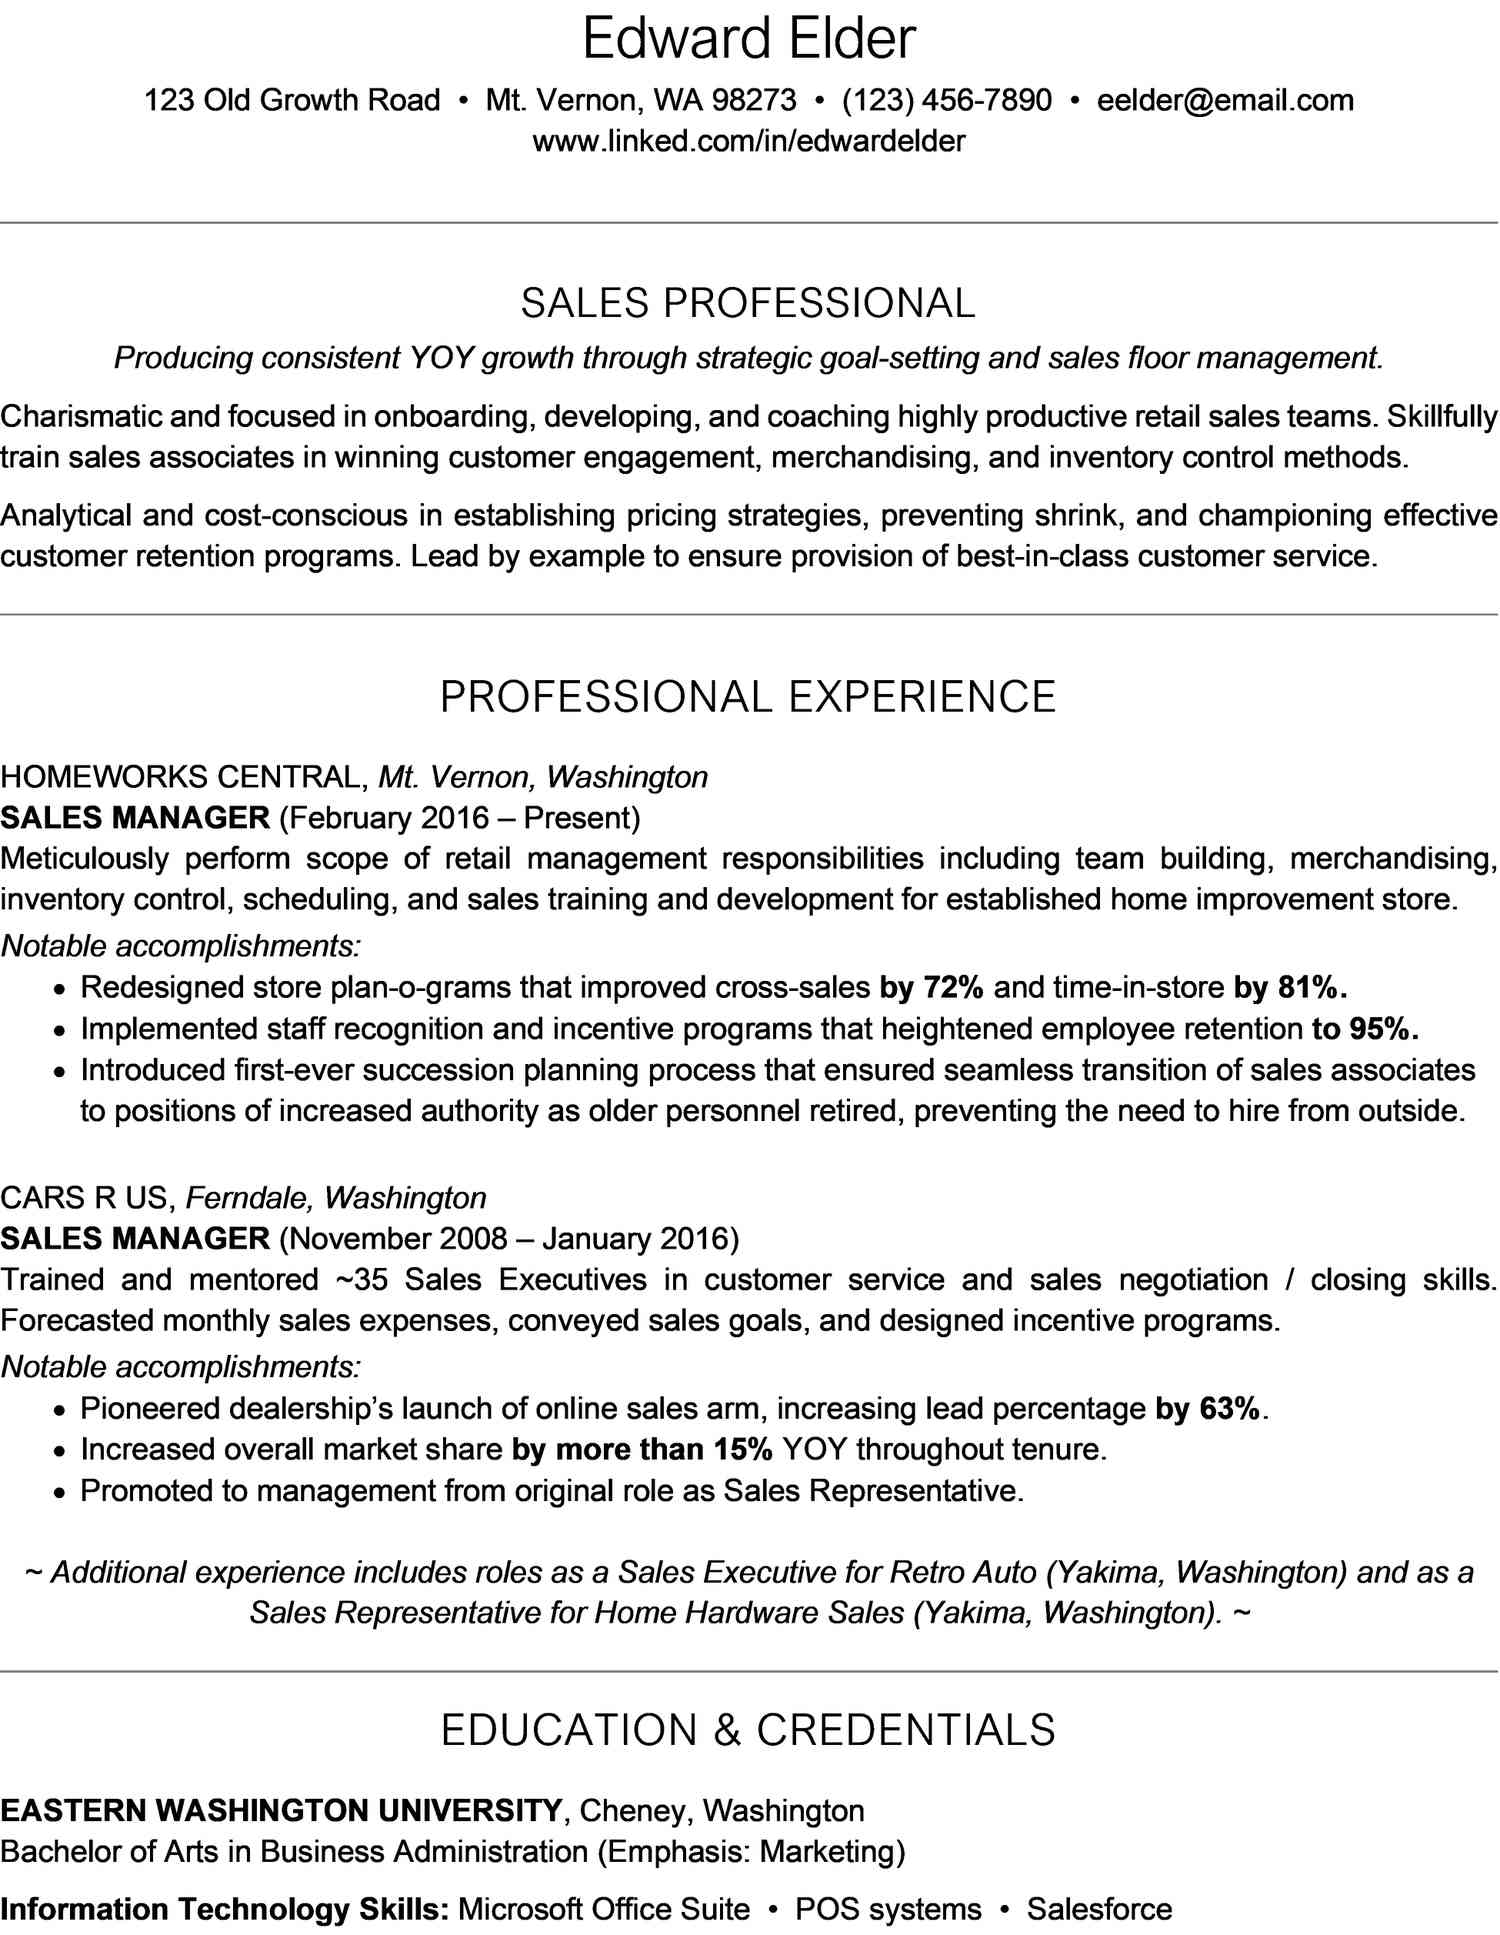 resume template for older job seekers